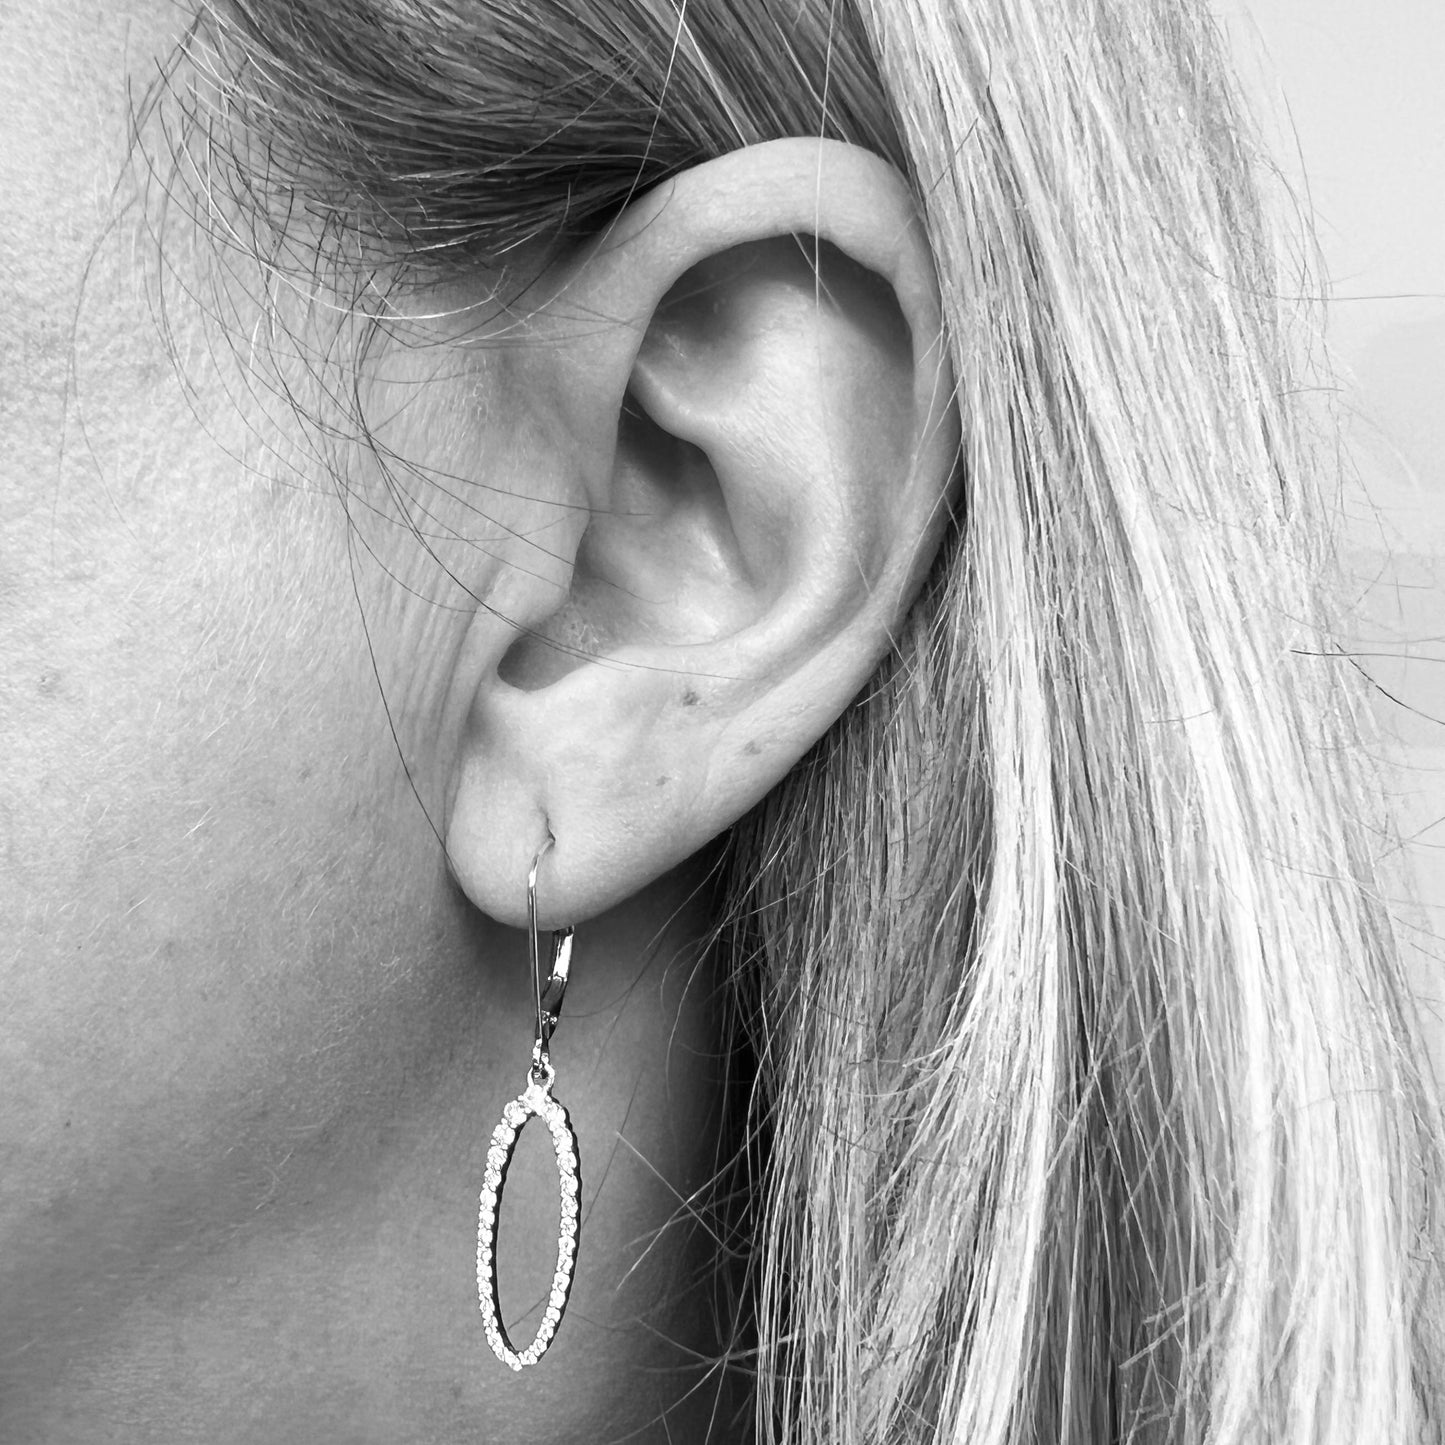 14kw diamond dangle earrings